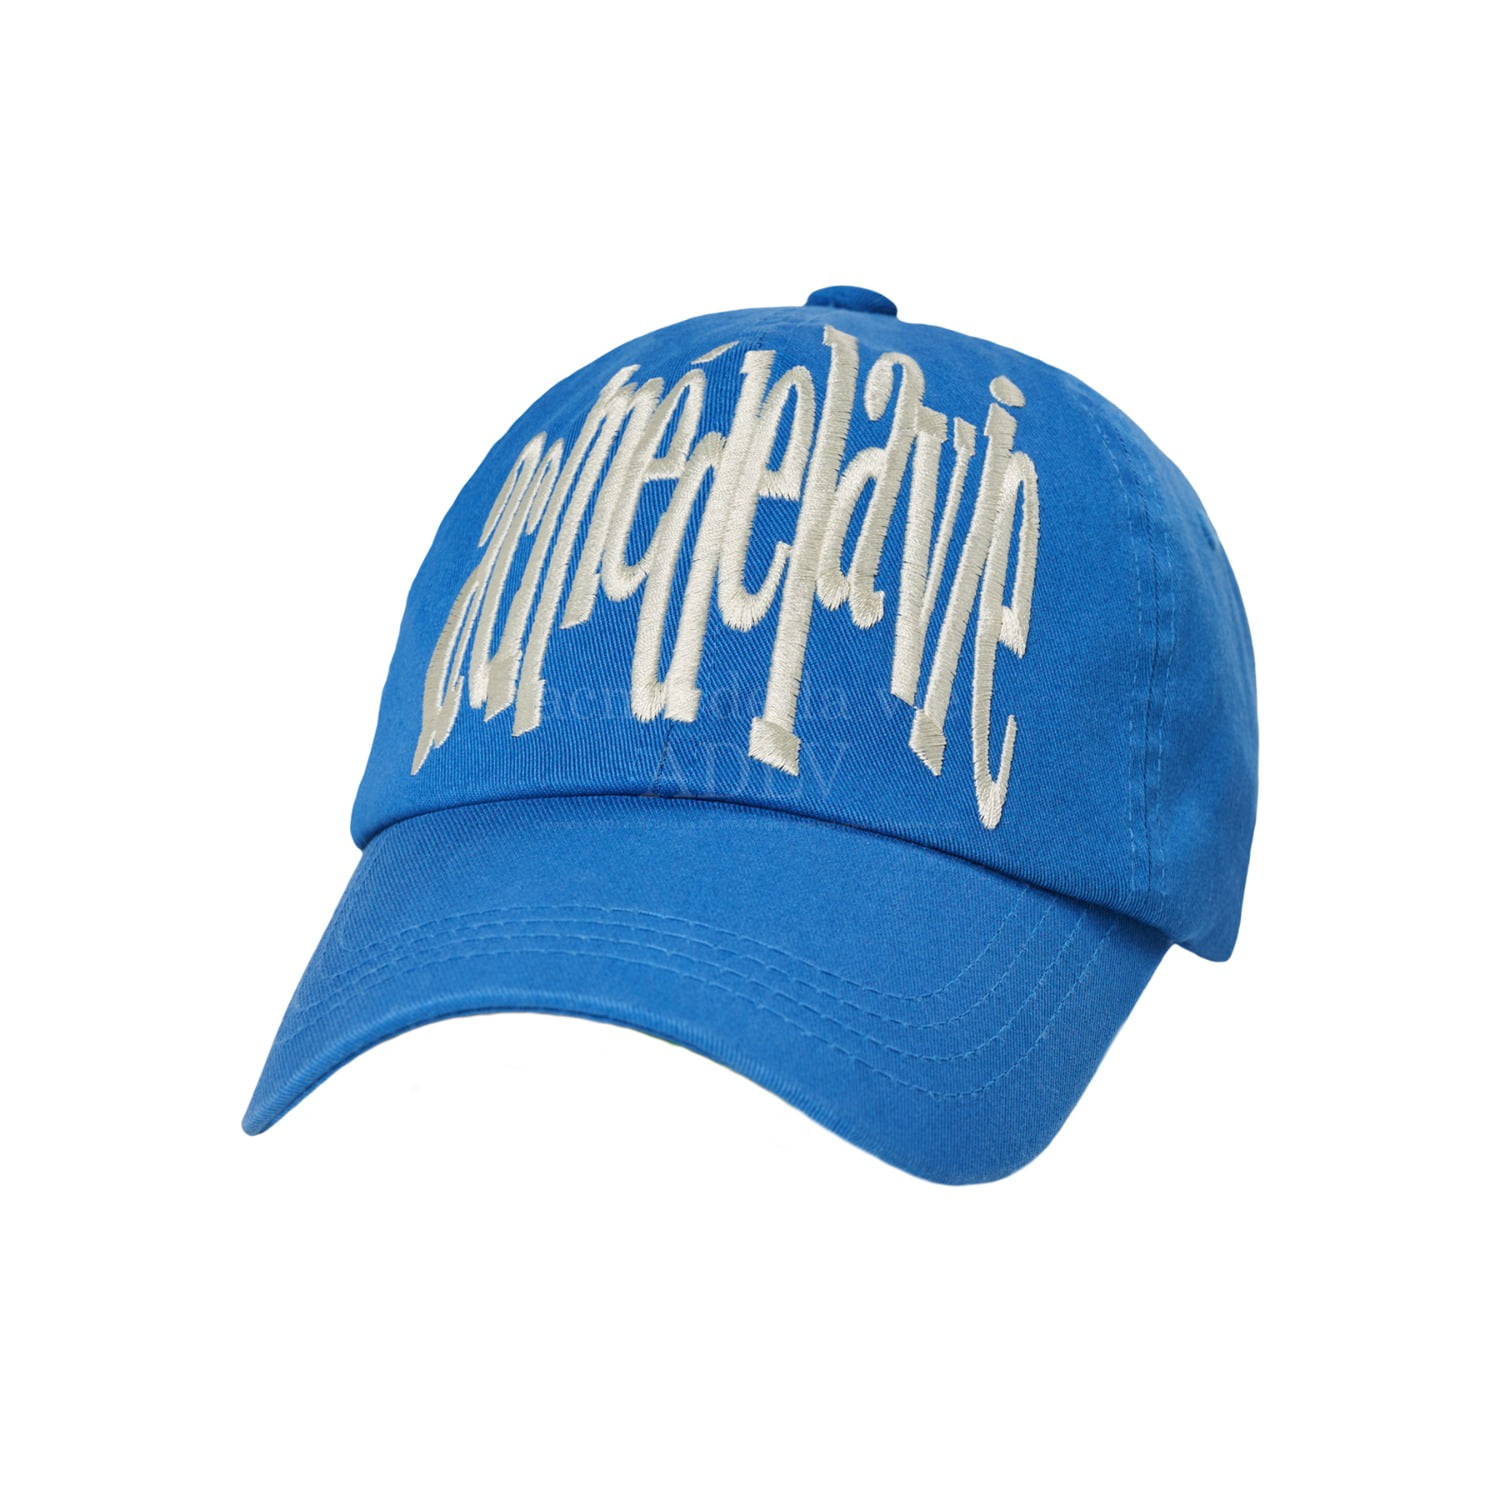 ADLV-[아크메드라비] UNBALANCE BIG LOGO BALL CAP BLUE(2월17일 입고예정)